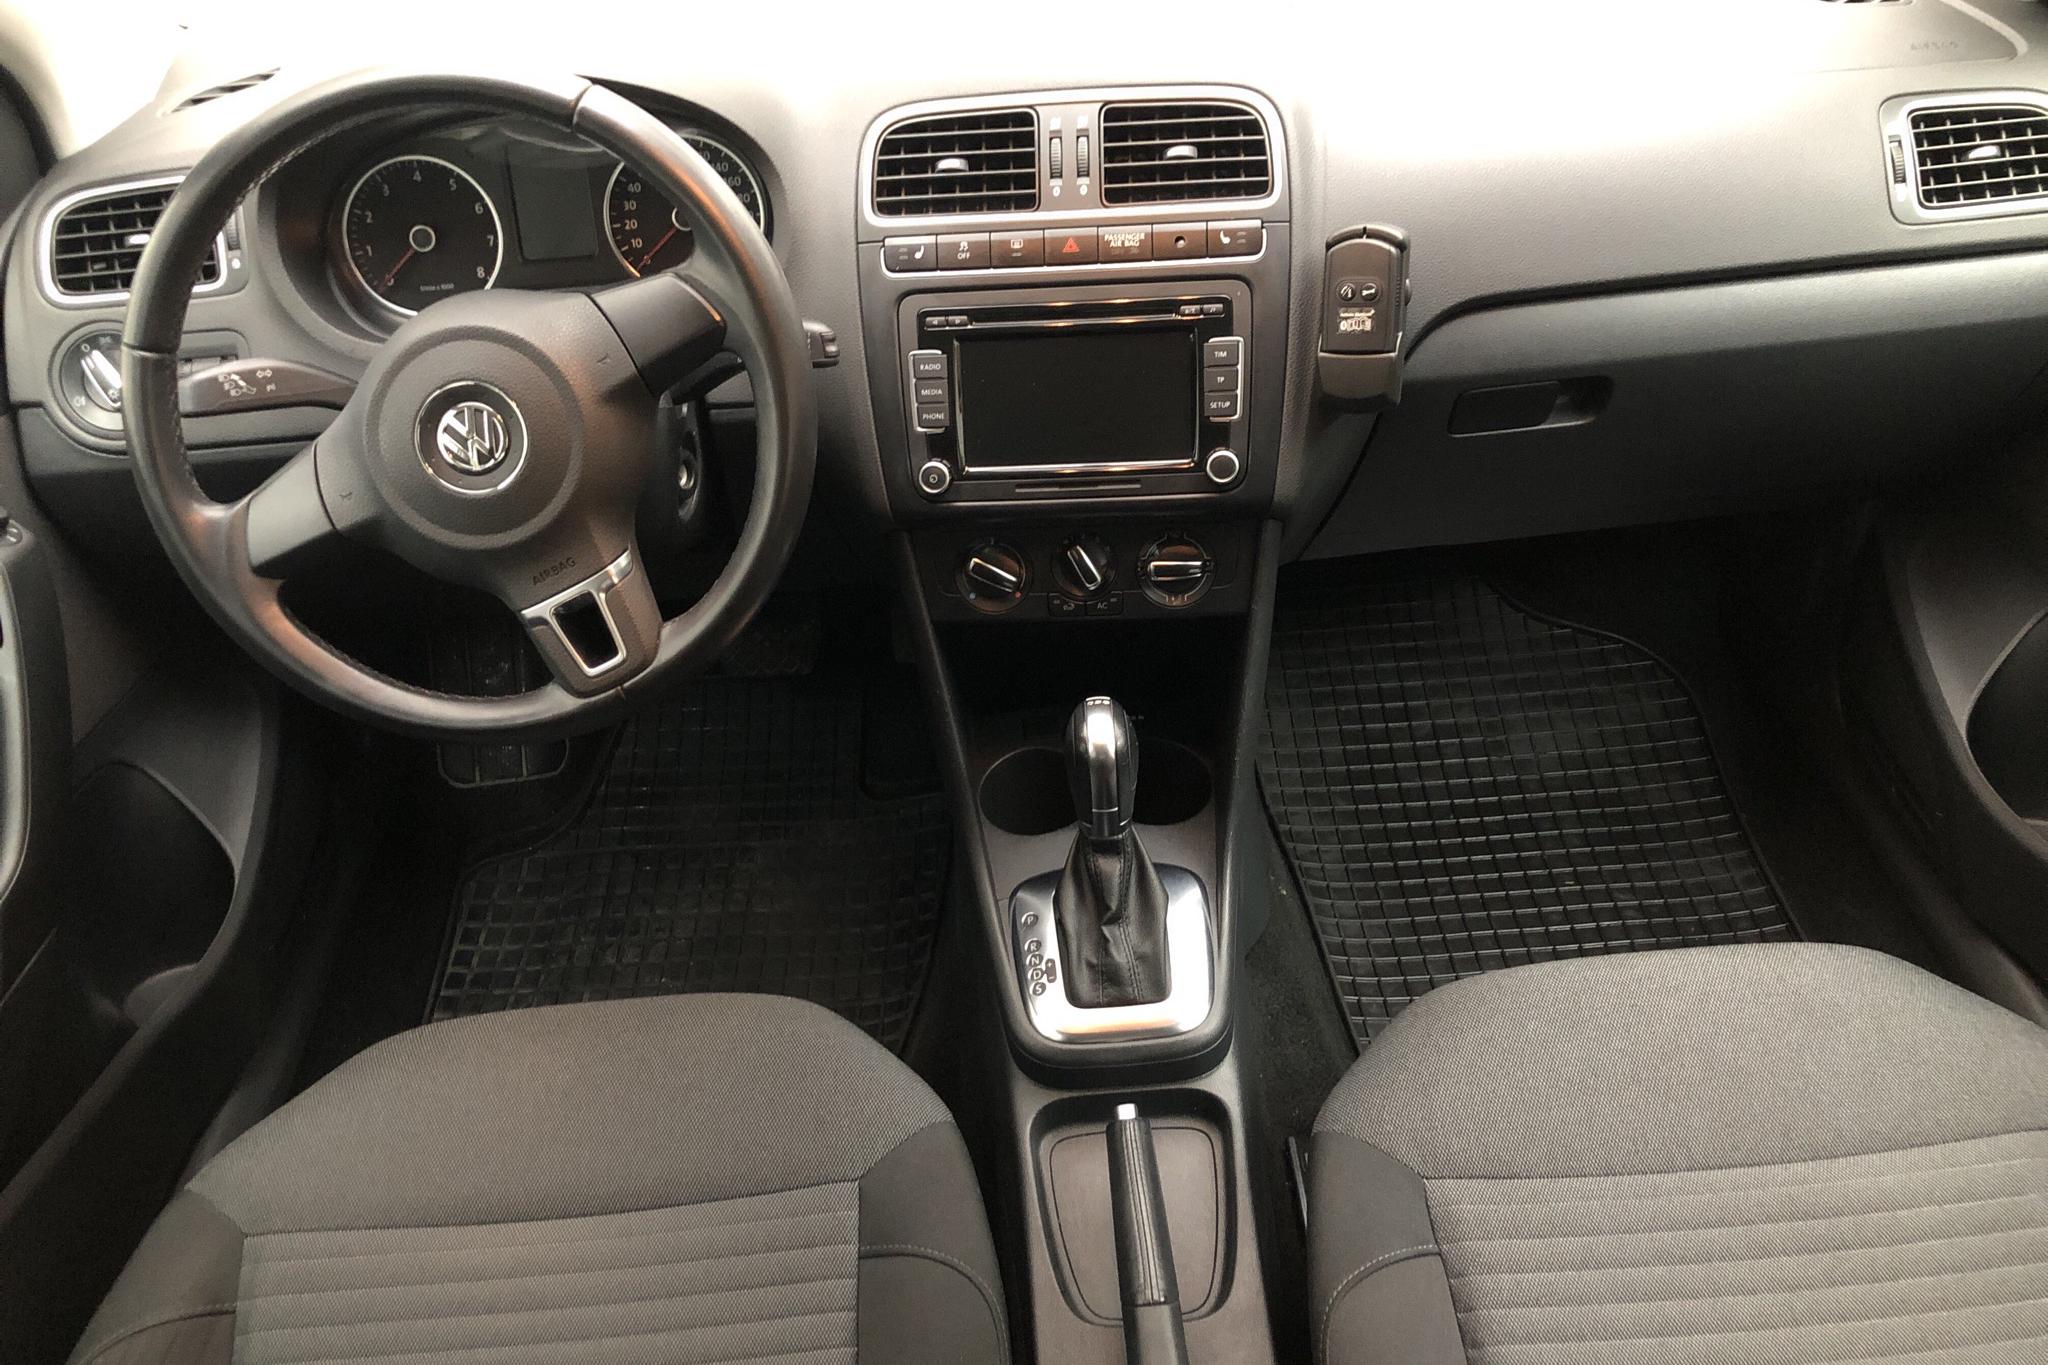 VW Polo 1.4 5dr (85hk) - 7 727 mil - Automat - vit - 2014